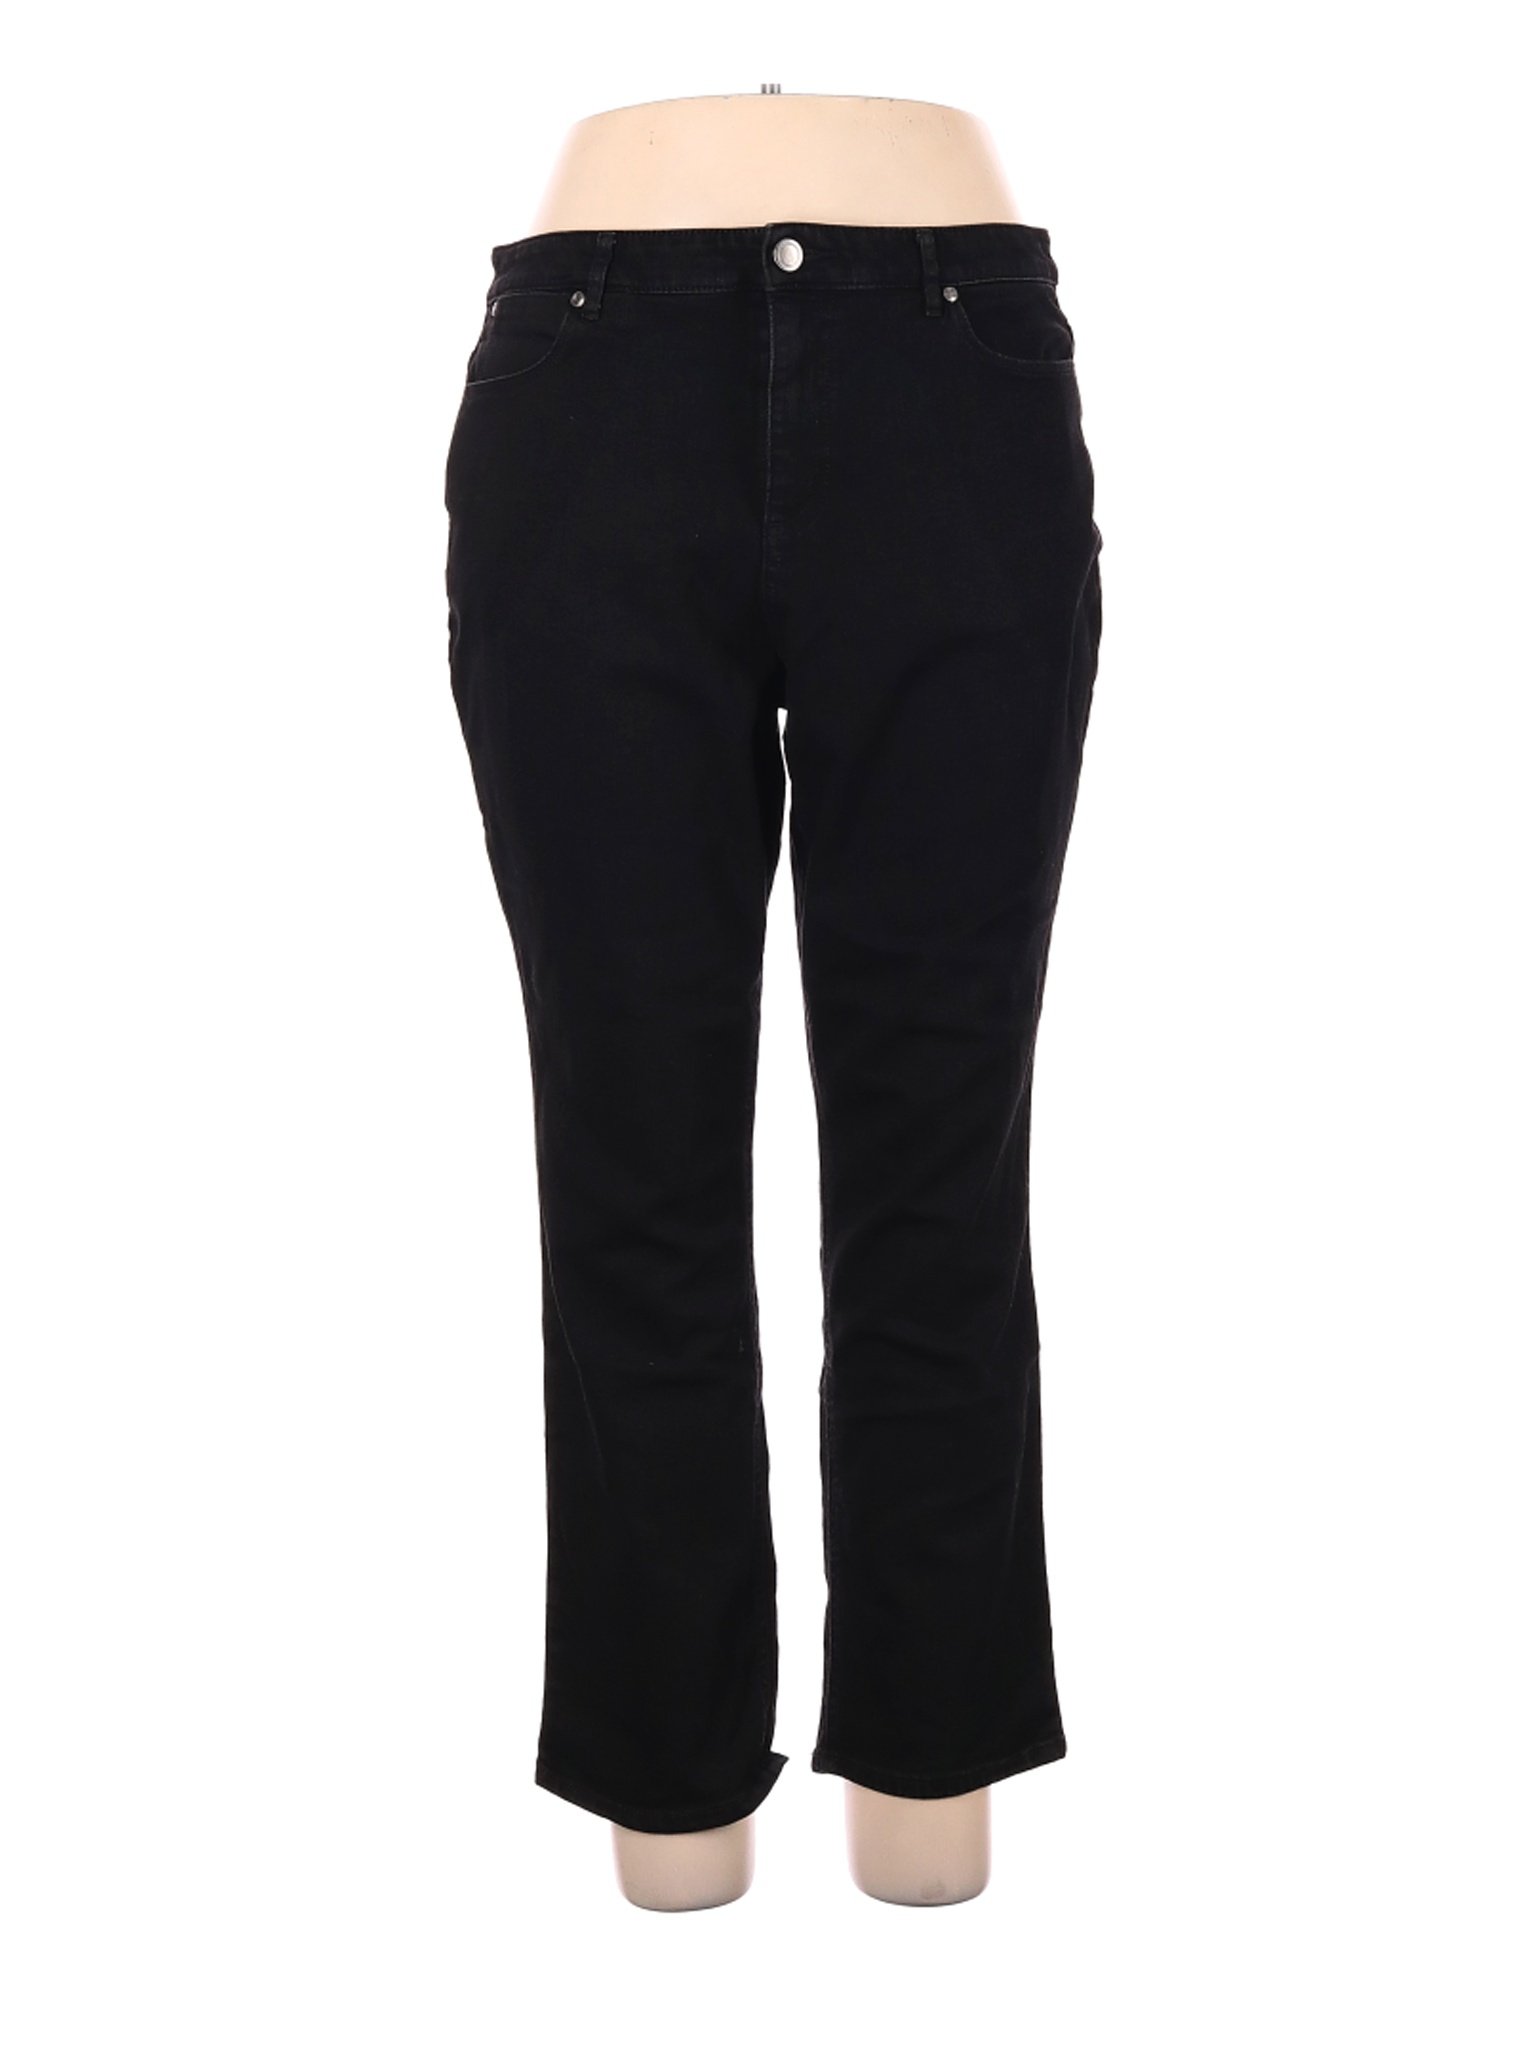 Christopher & Banks Women Black Jeans 16 Petites | eBay